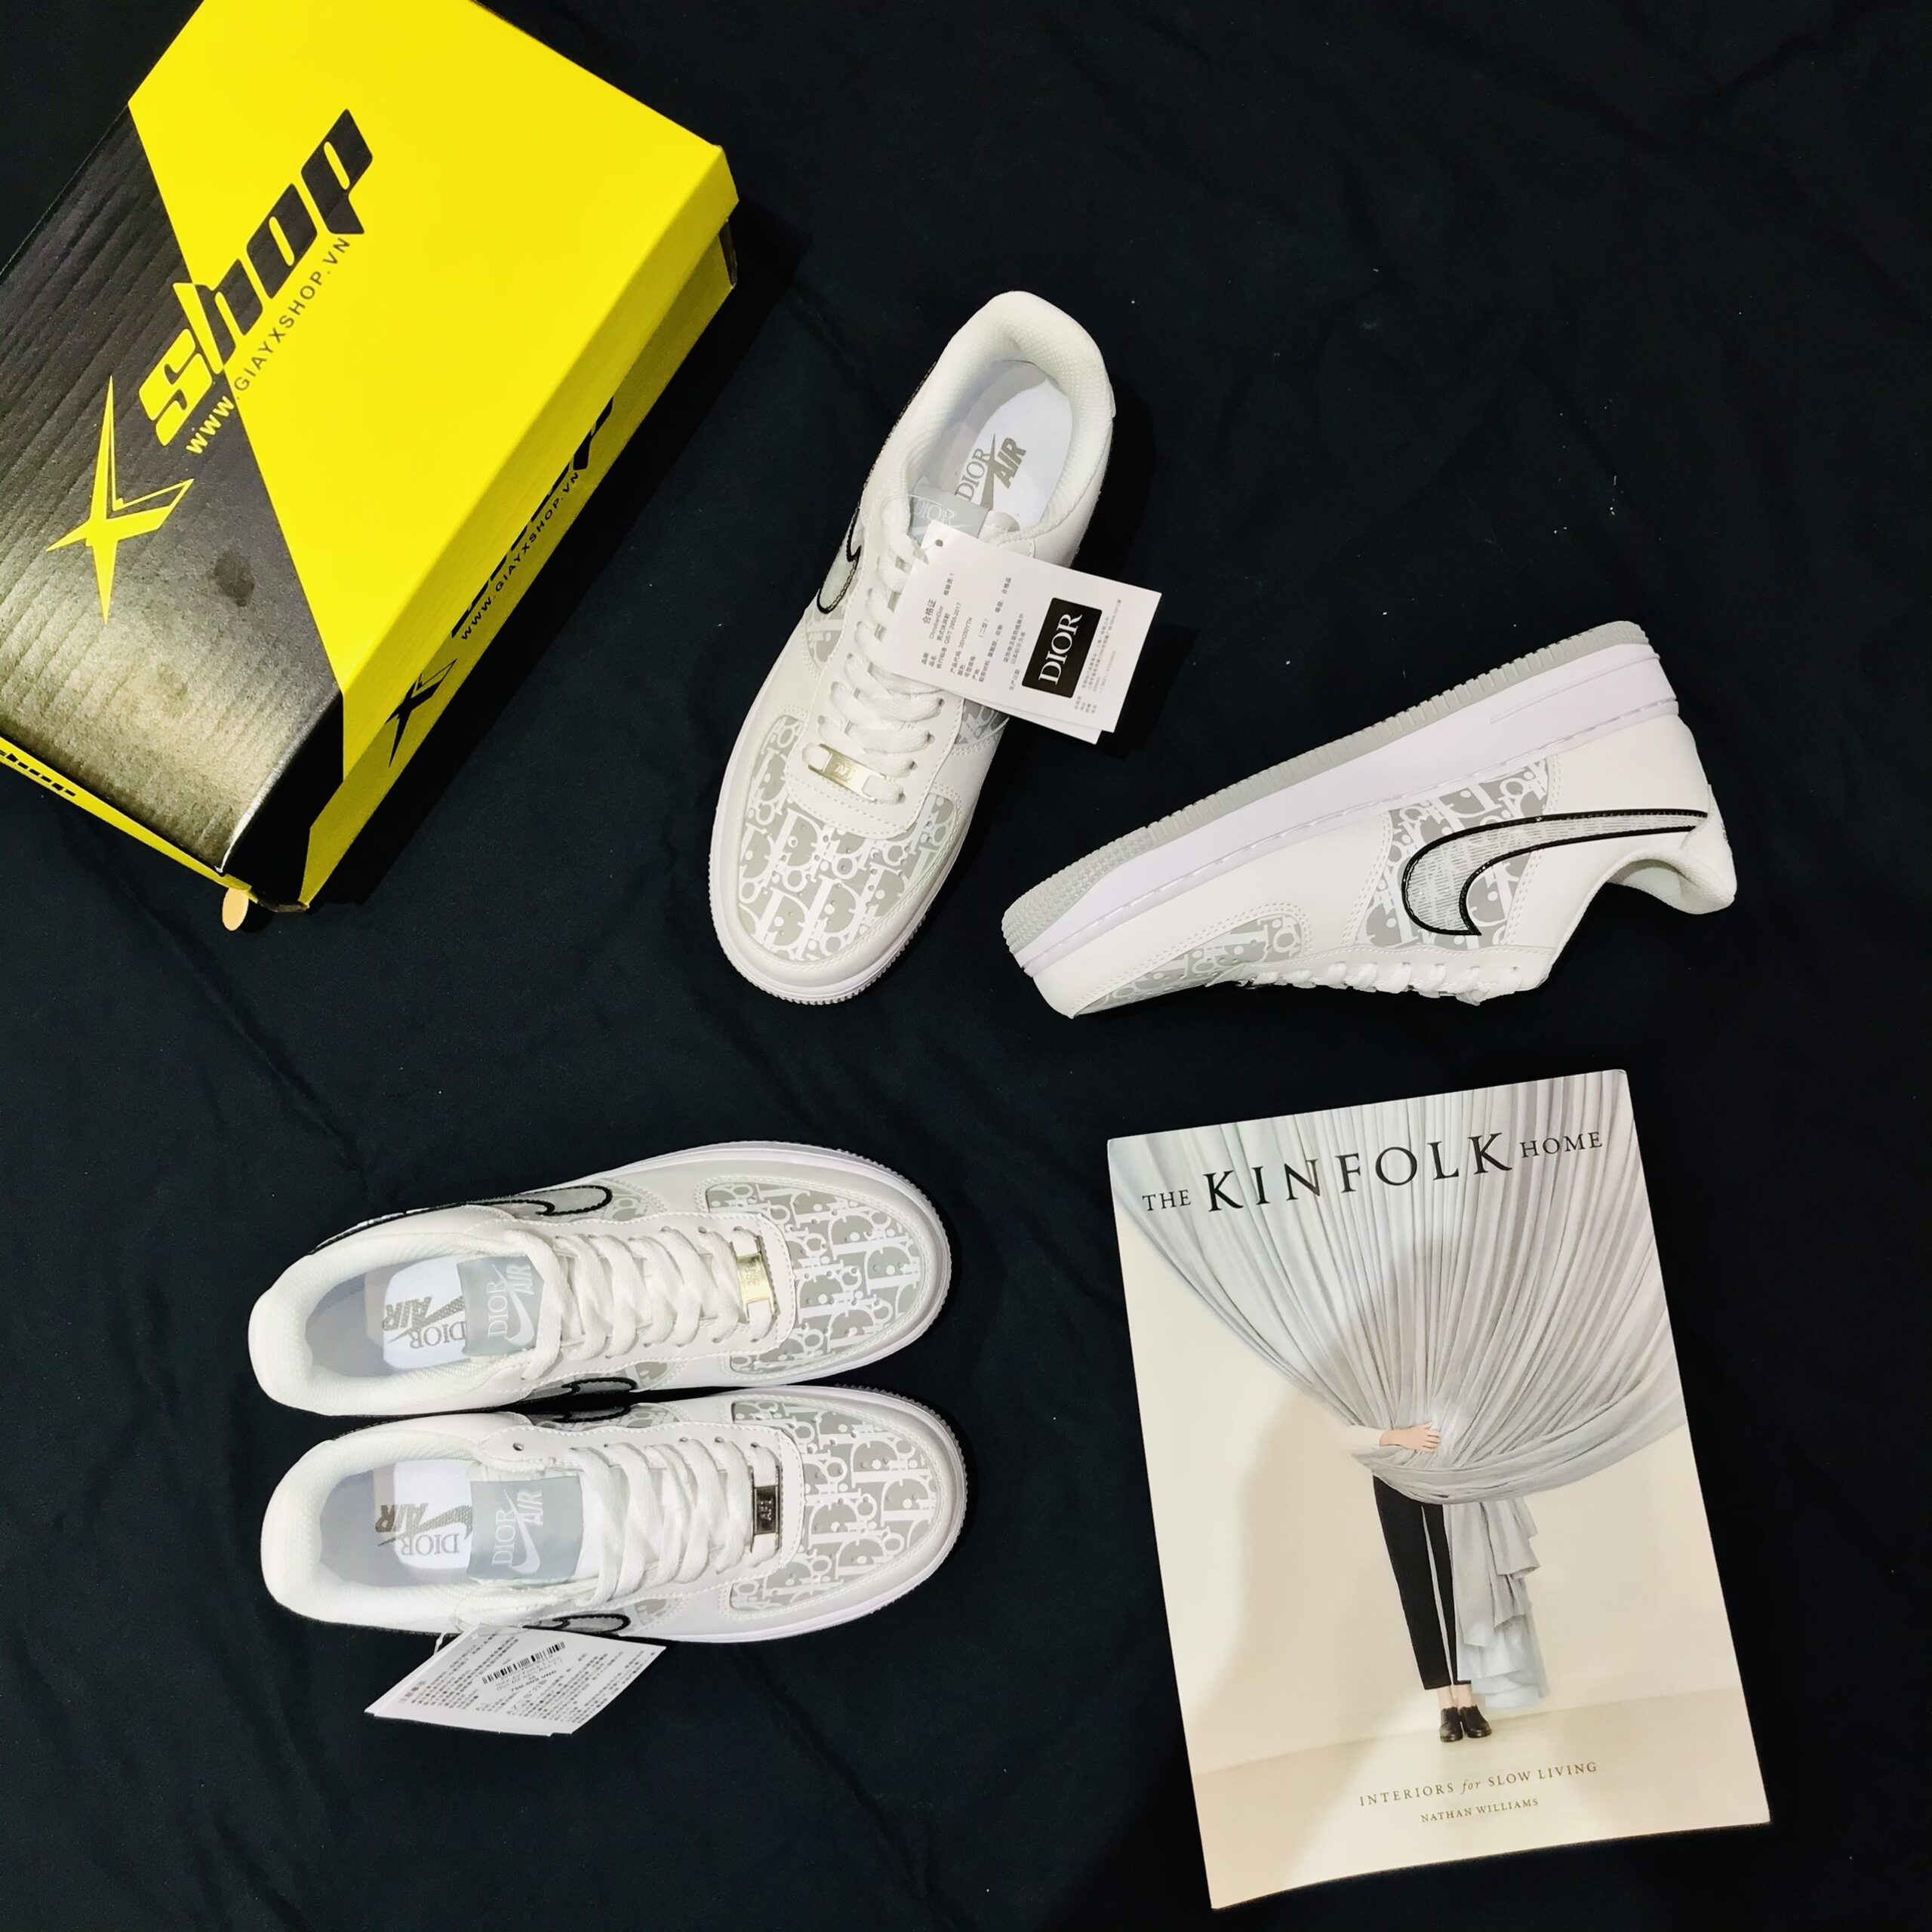 Giày Nike Dior x Air Jordan 1 High Wolf Grey CN8607002 AuthenticShoes